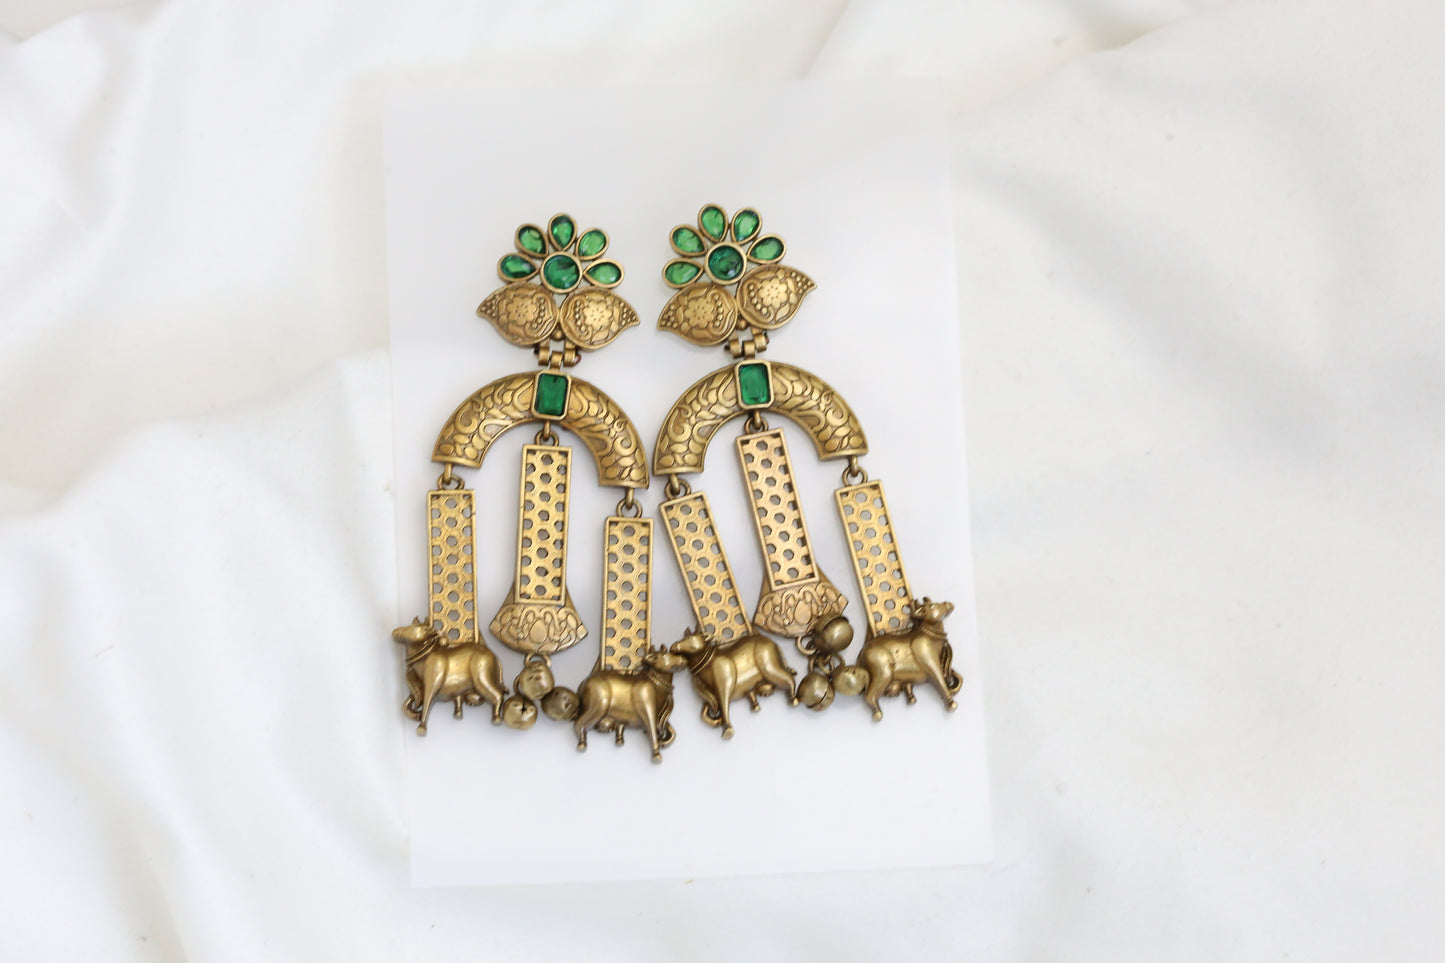 Nandi Antique Gold Earrings - Green